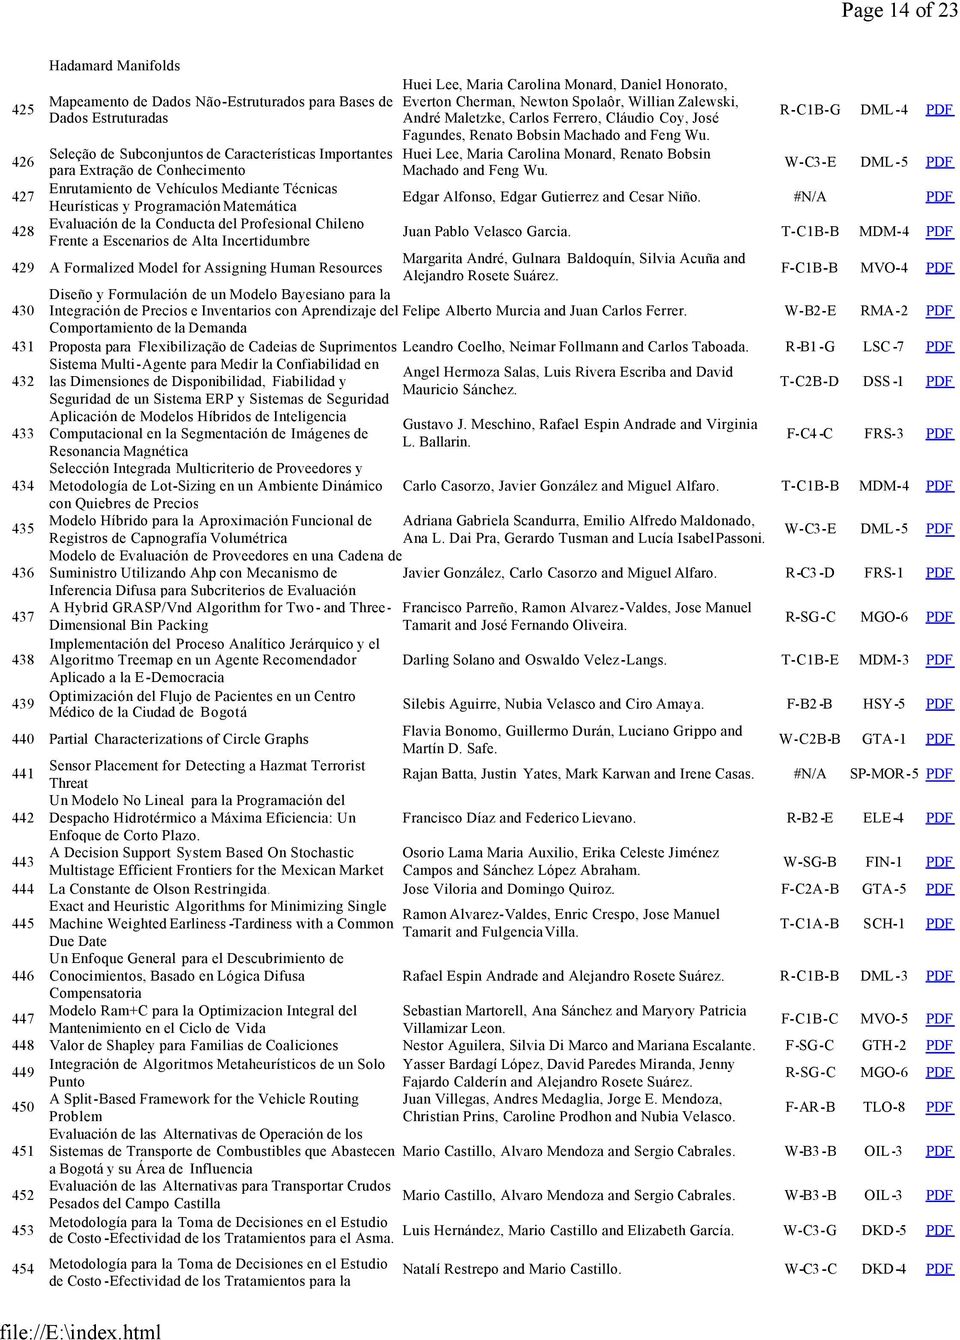 R-C1B-G DML-4 PDF Seleção de Subconjuntos de Características Importantes para Extração de Conhecimento W-C3-E DML-5 PDF Enrutamiento de Vehículos Mediante Técnicas Heurísticas y Programación